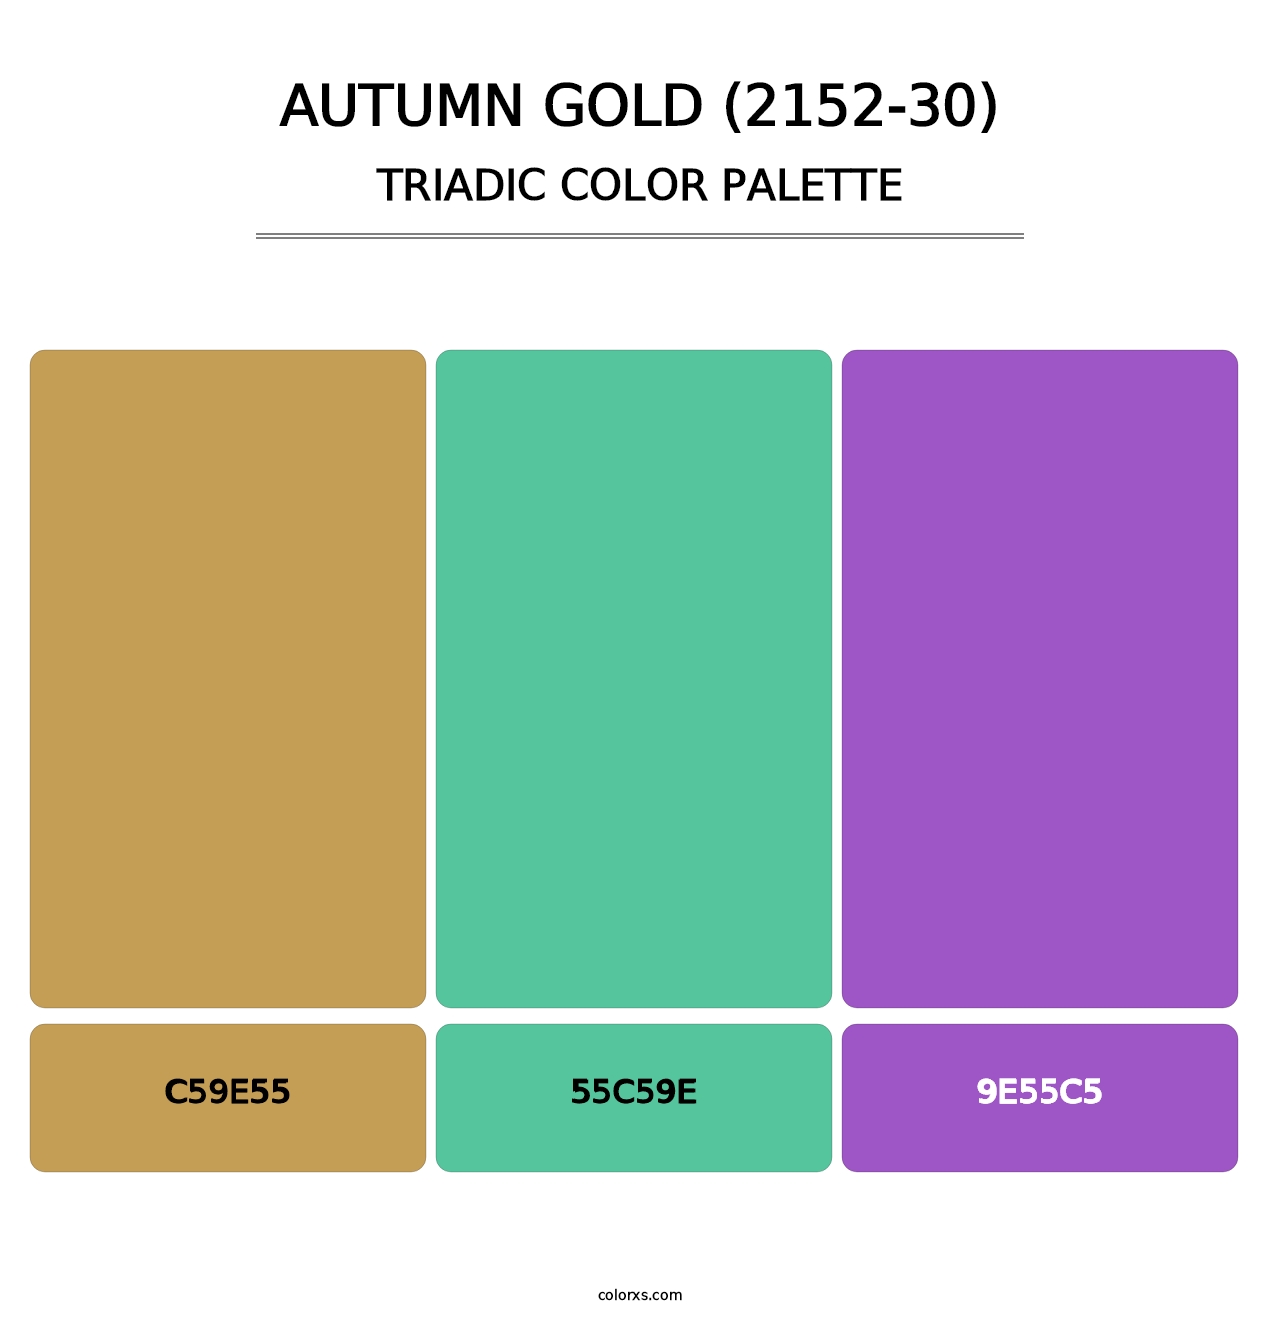 Autumn Gold (2152-30) - Triadic Color Palette